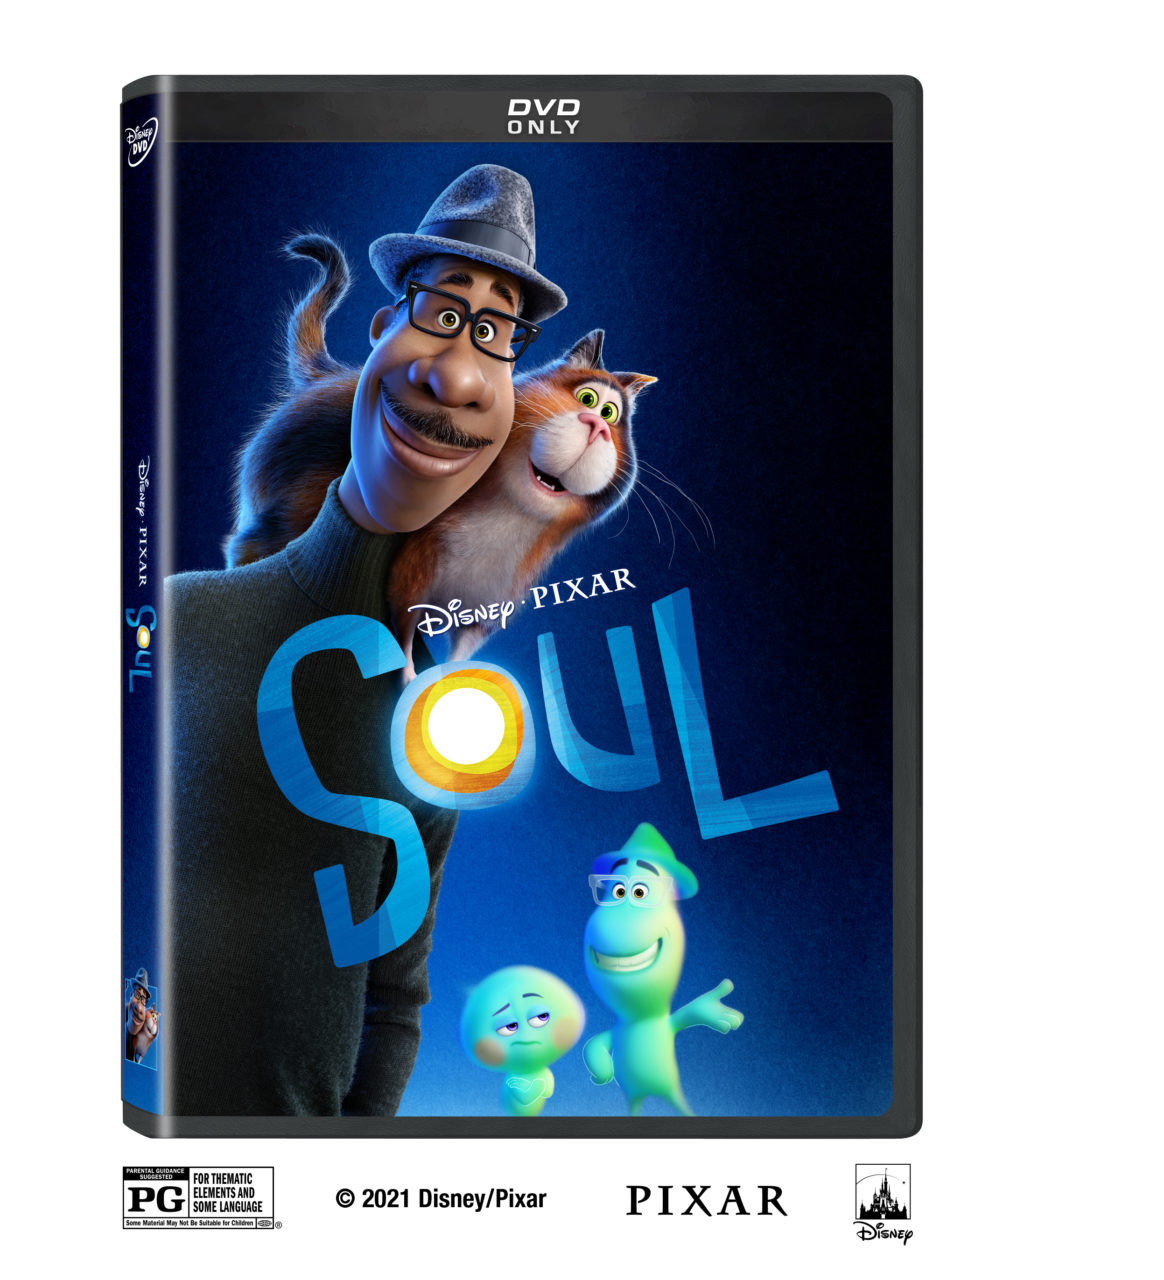 Disney and Pixar's SOUL DVD cover (Walt Disney Studios Home Entertainment)